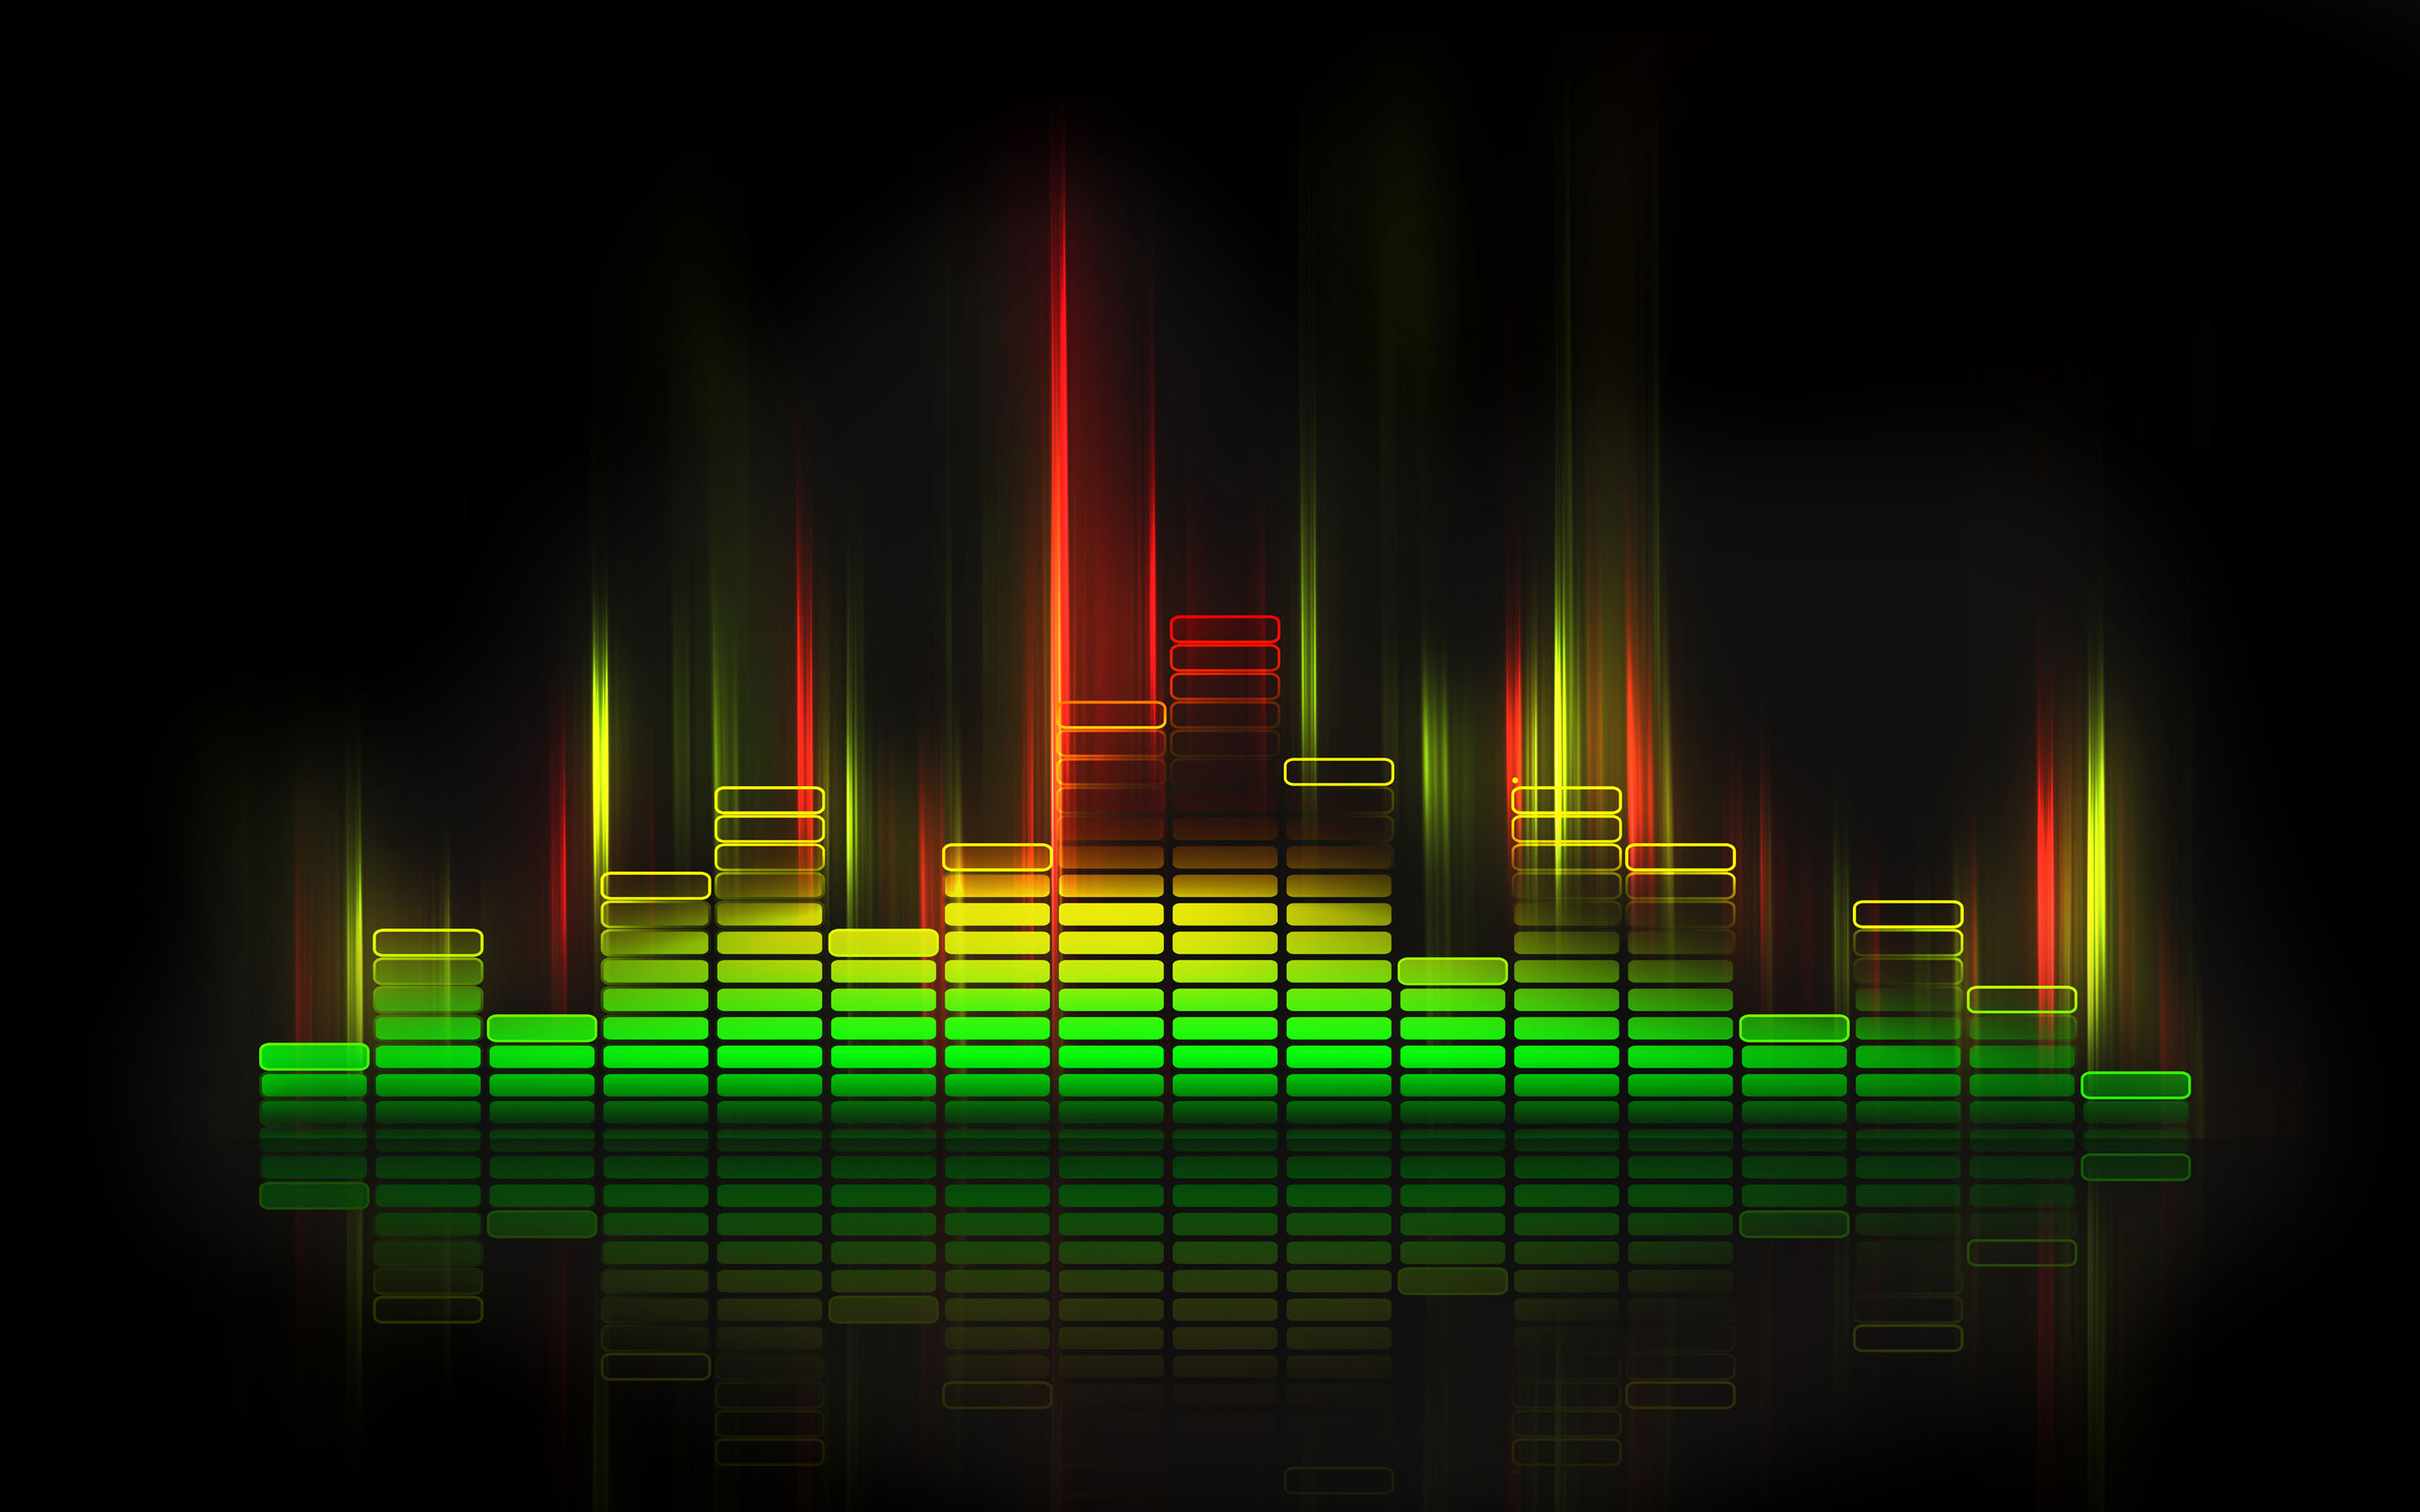 Sound Art Abstract Music Wallpaper HD Image F